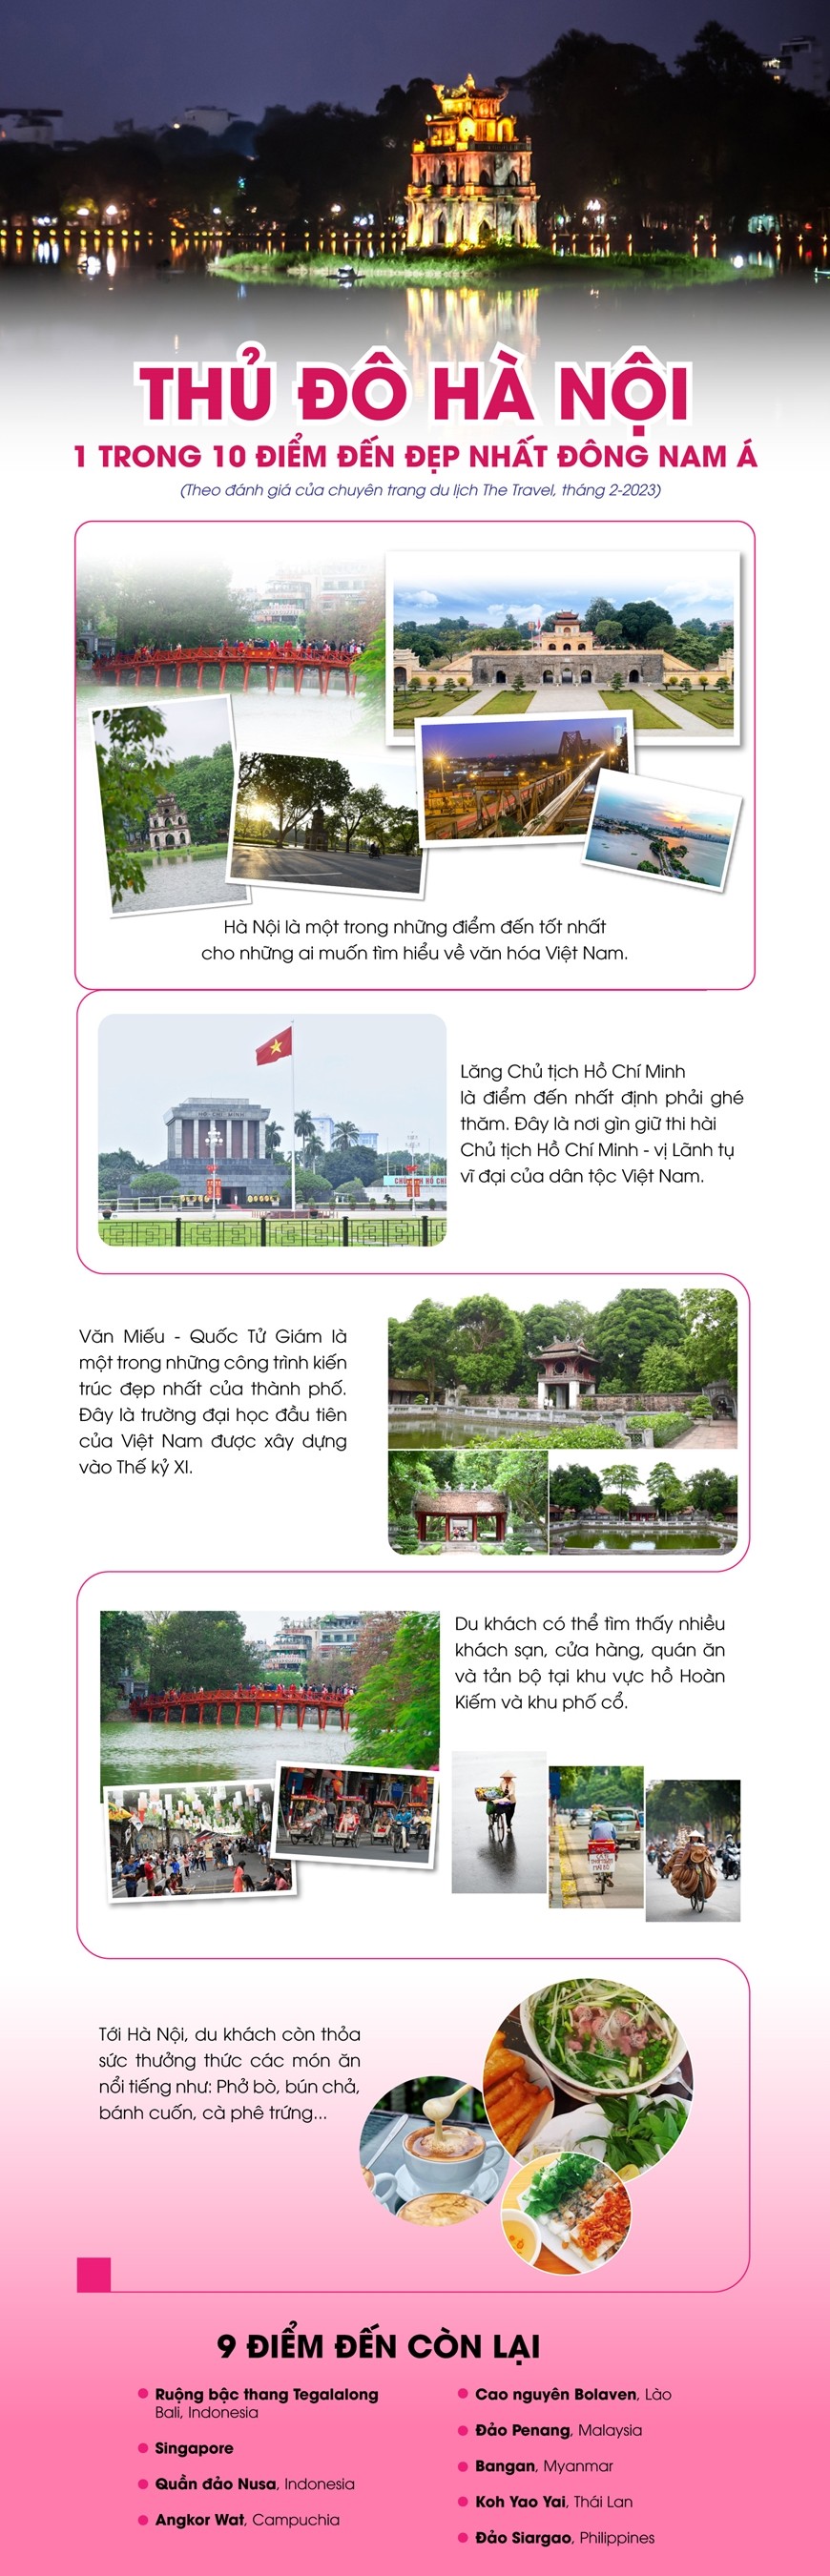 info-hanoi-top-10-diem-den-dep-nhat-dna-2-1676694423.jpg